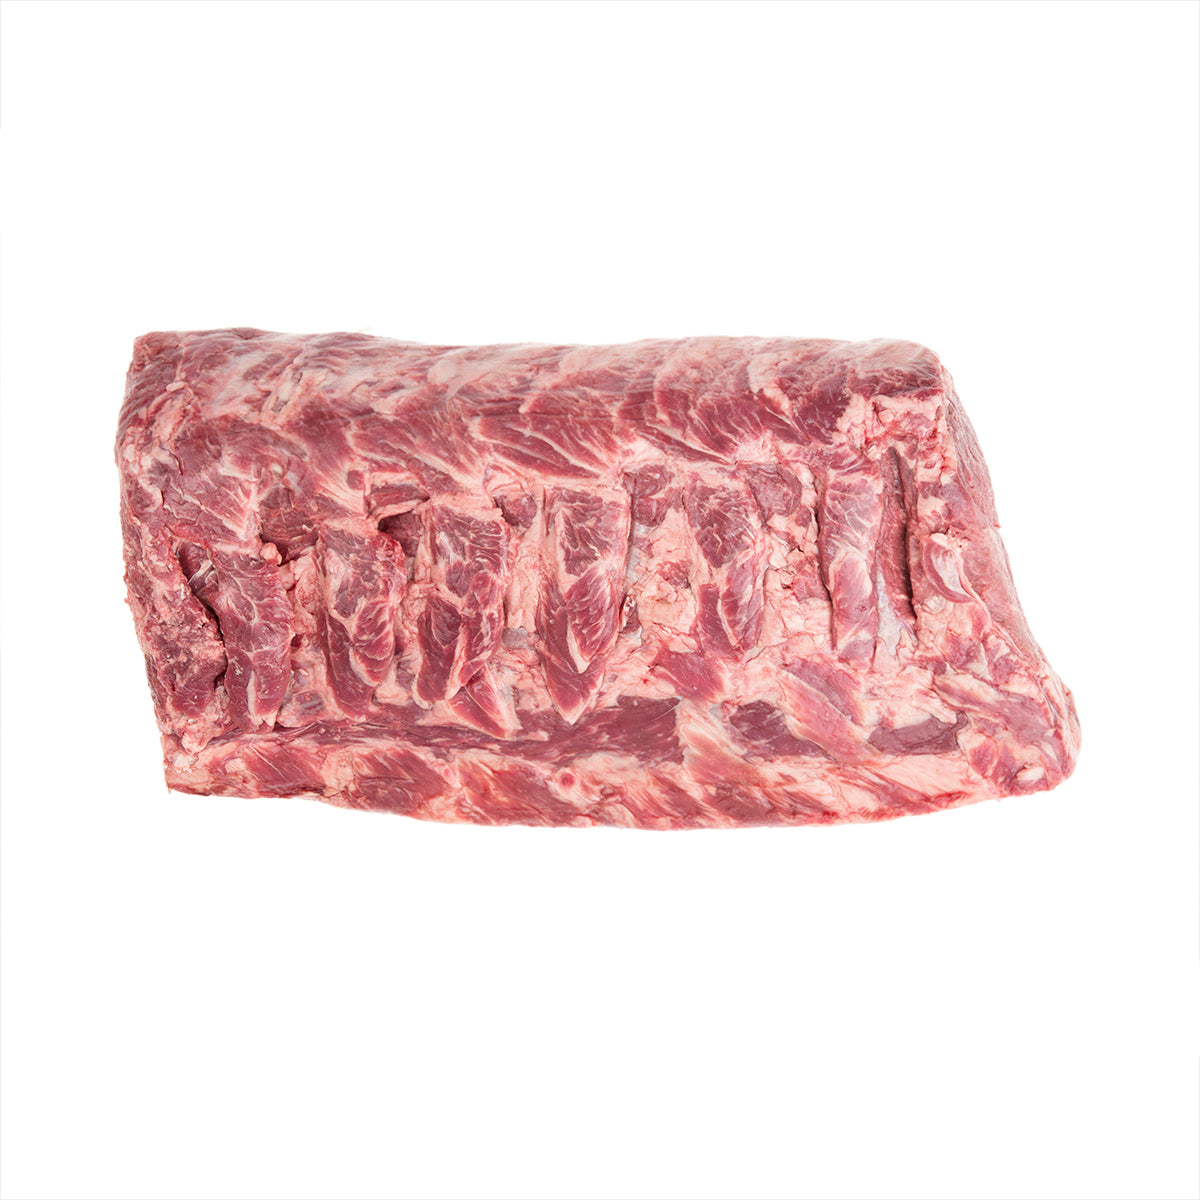 Demkota Ranch Beef Prime Boneless Ribeye Roast